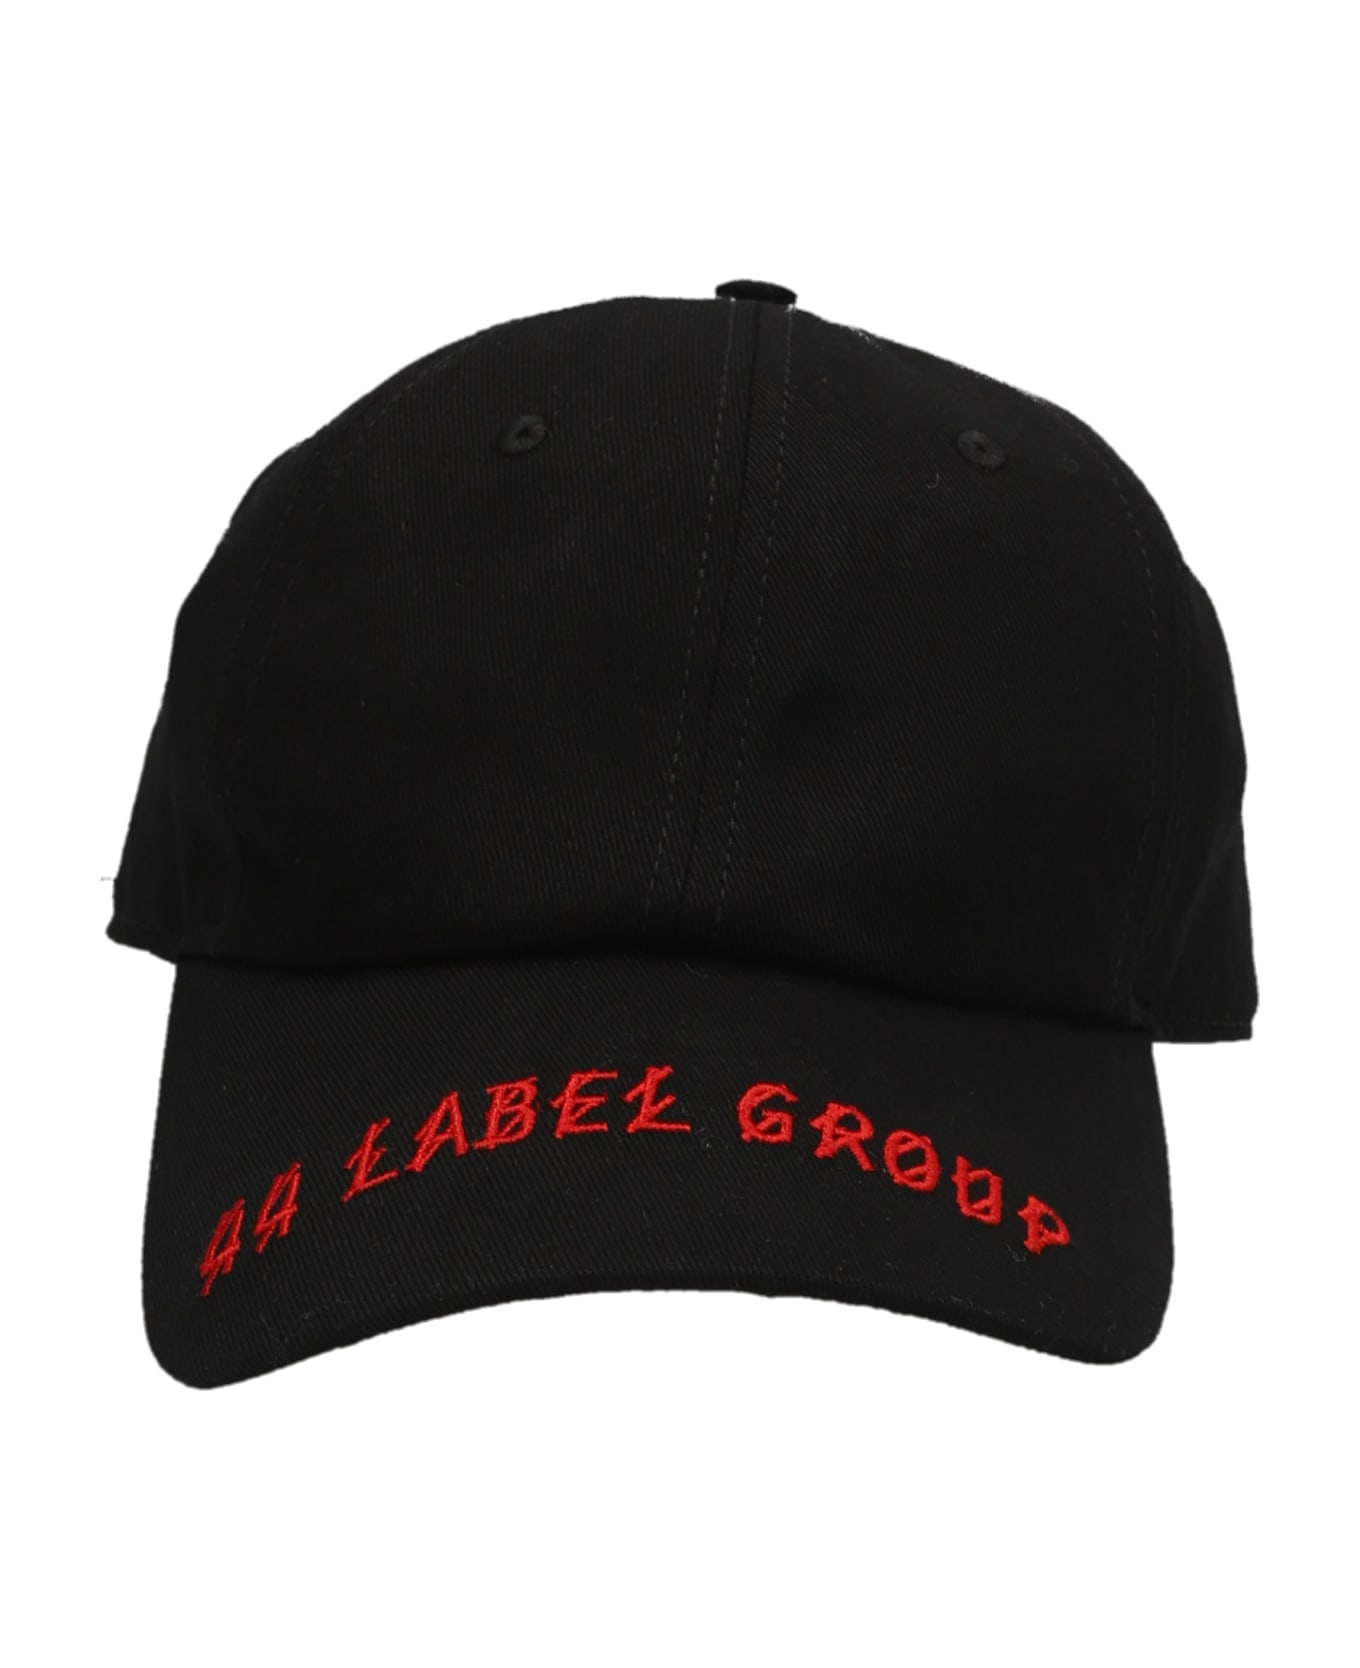 44 Label Group Logo Cap - Black  